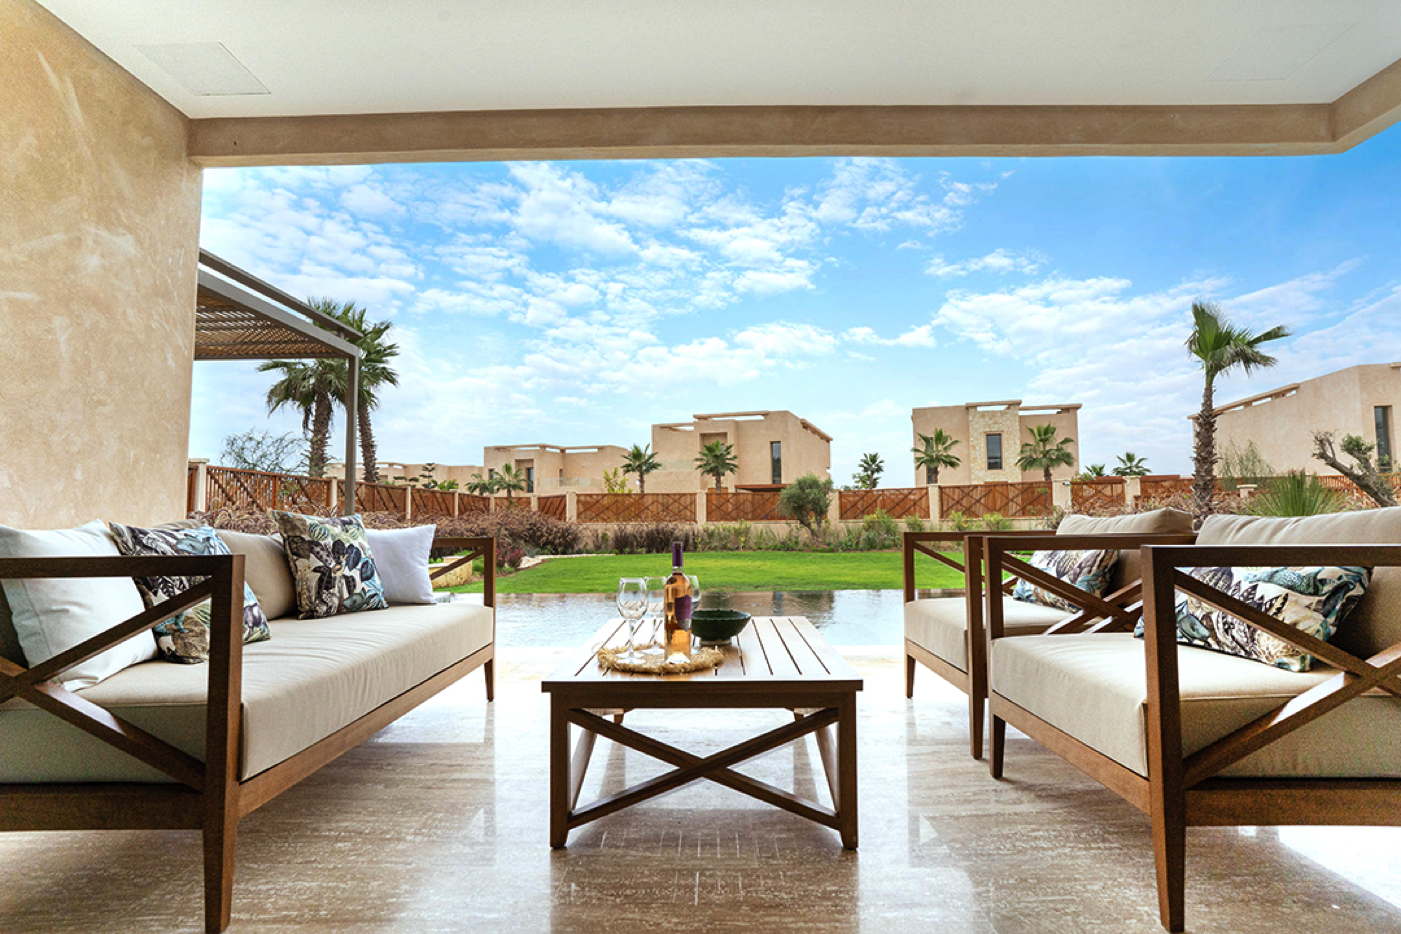 Ferienvilla-Hotelvilla-Strandvilla-mit Pool-Marokko-Taghazout